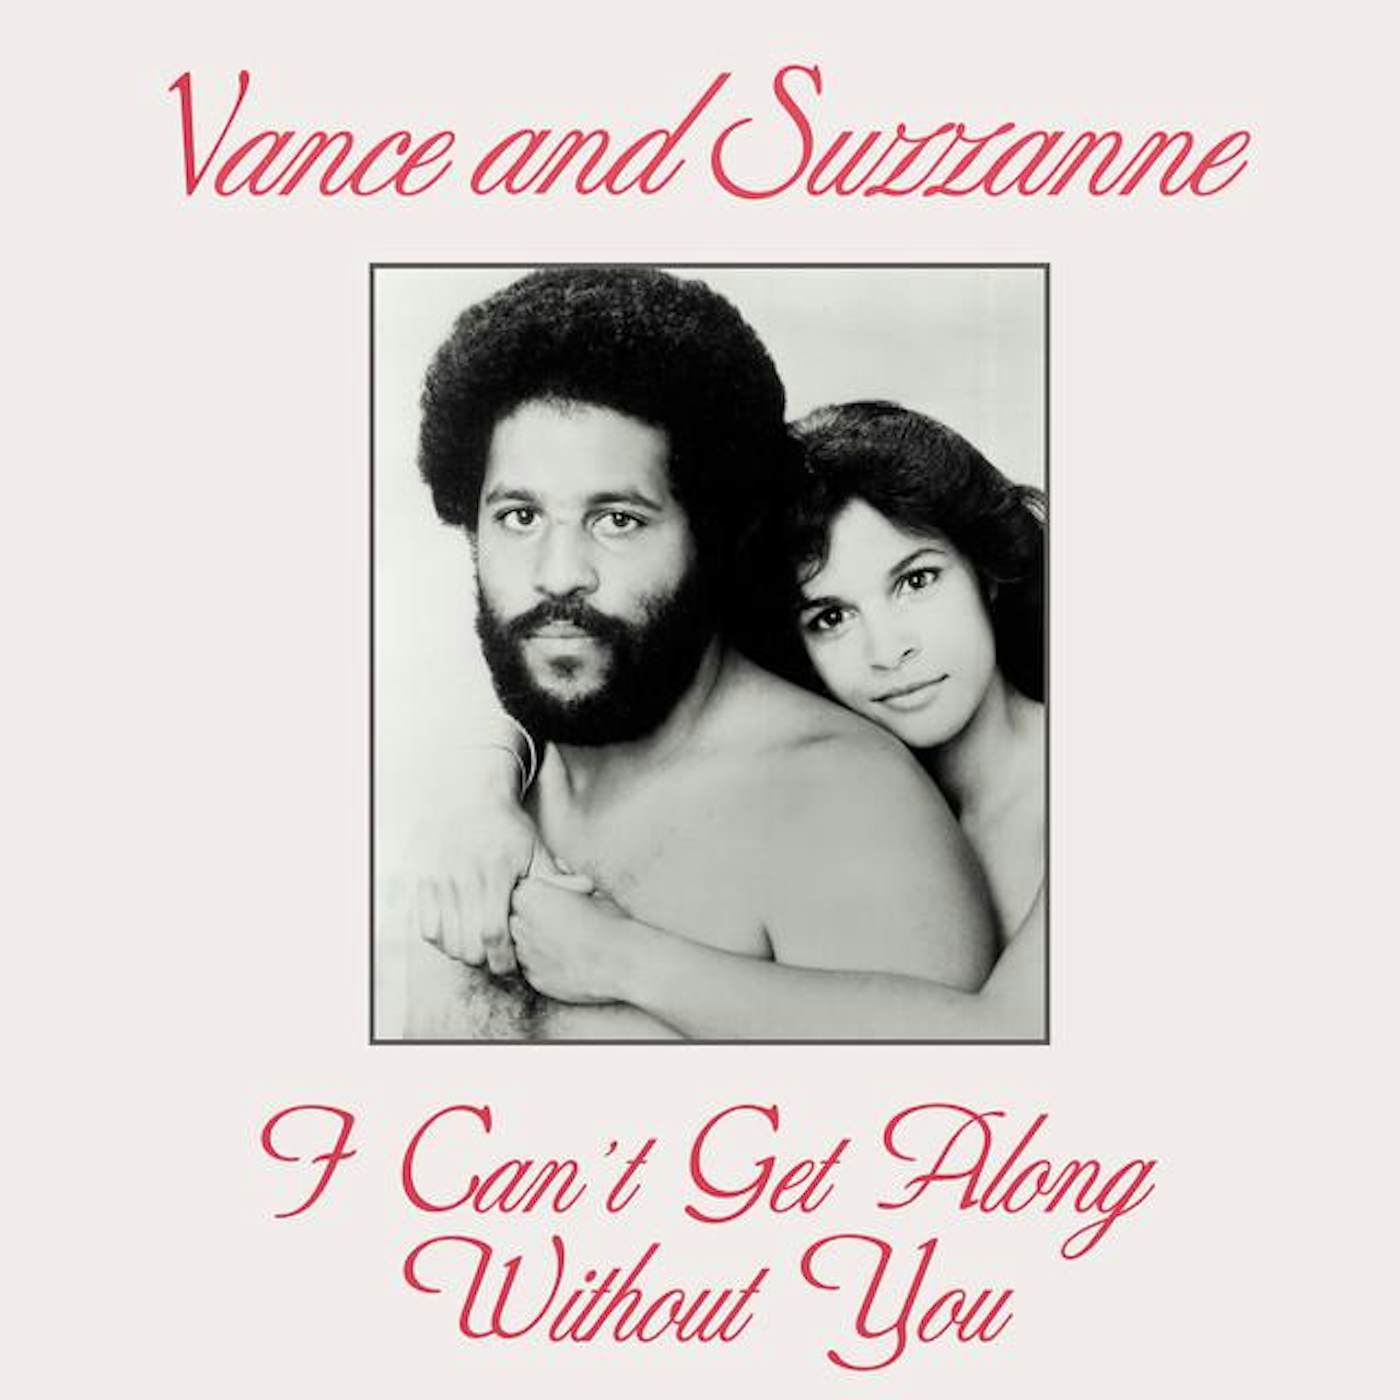 Vance and Suzzanne